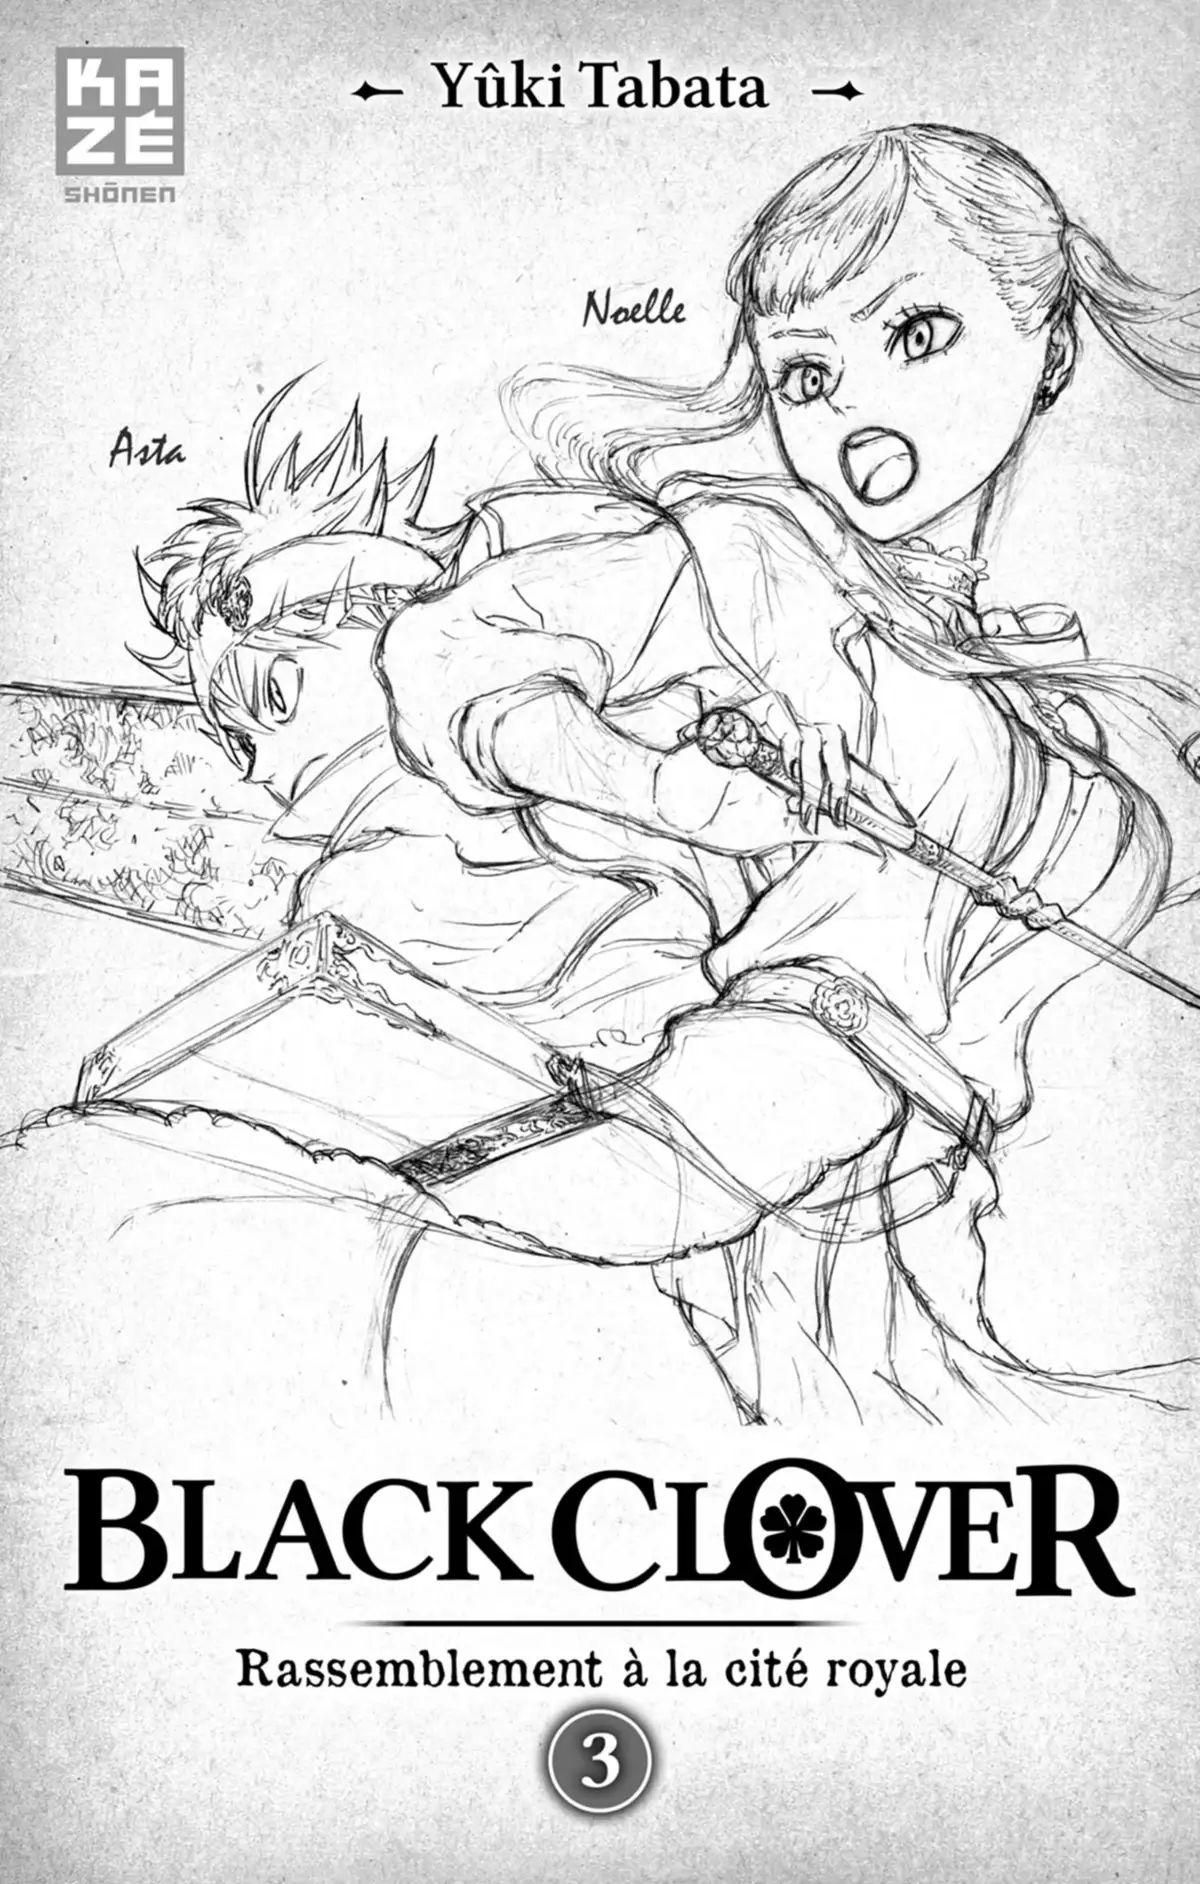 Black Clover Volume 3 page 3